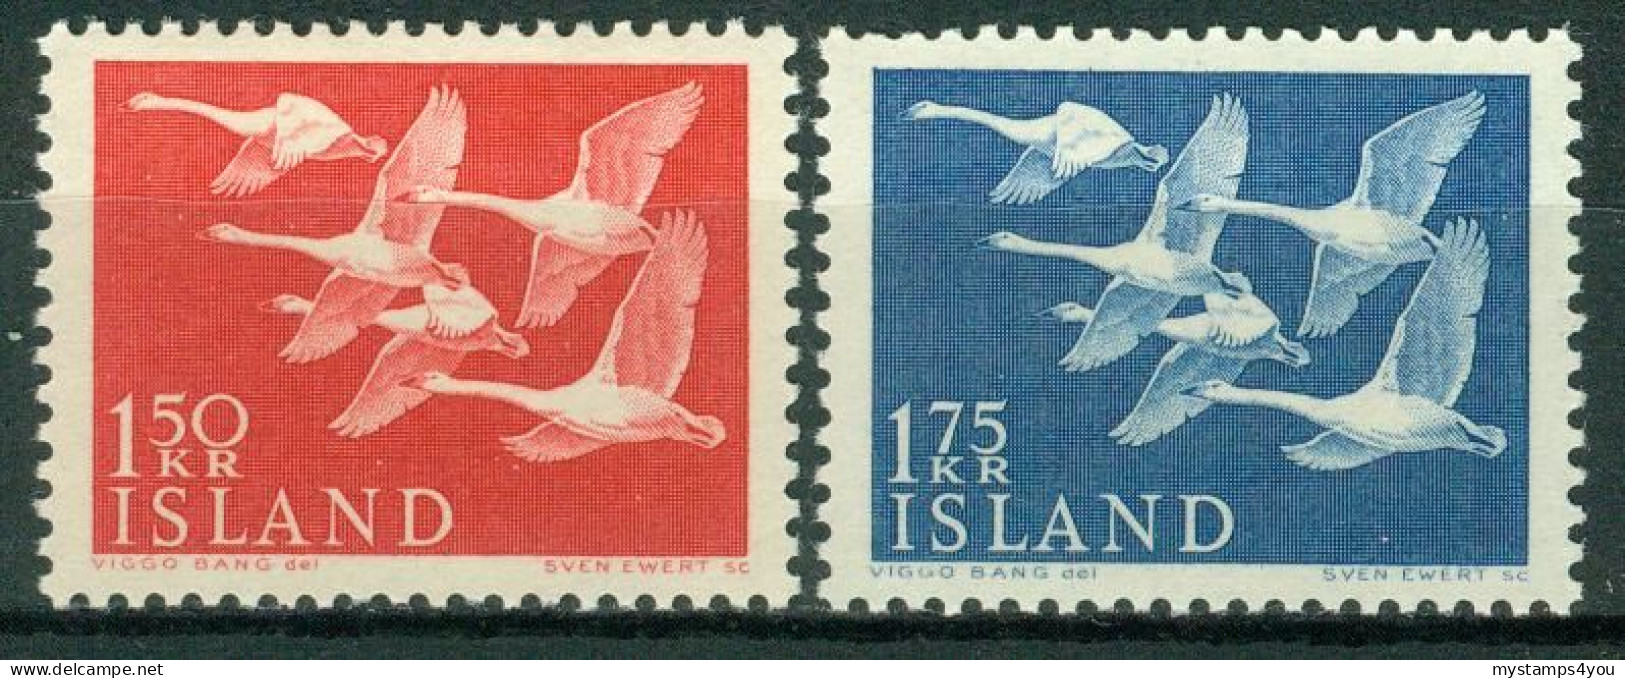 Bm Iceland 1956 MiNr 312-313 MNH | Northern Countries' Day #5-0208 - Nuevos